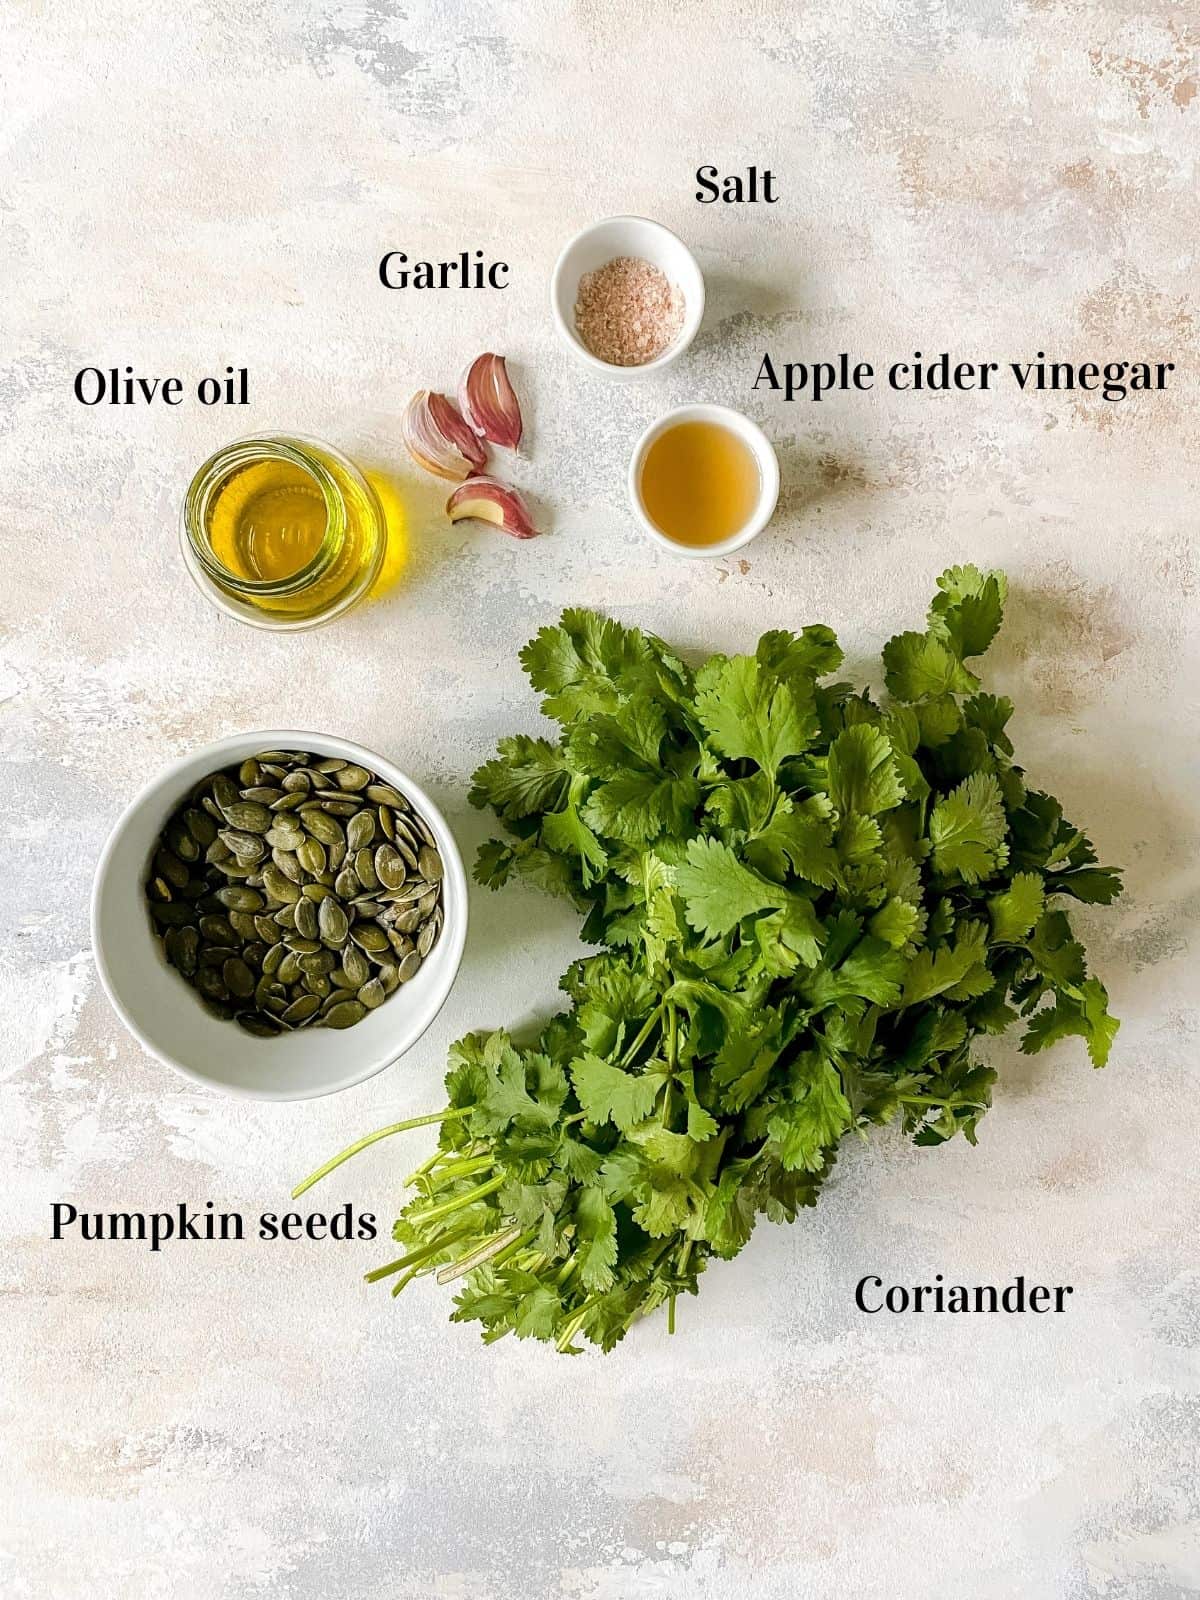 coriander, pumpkin seeds, olive oil, salt, garlic and apple cider vinegar.